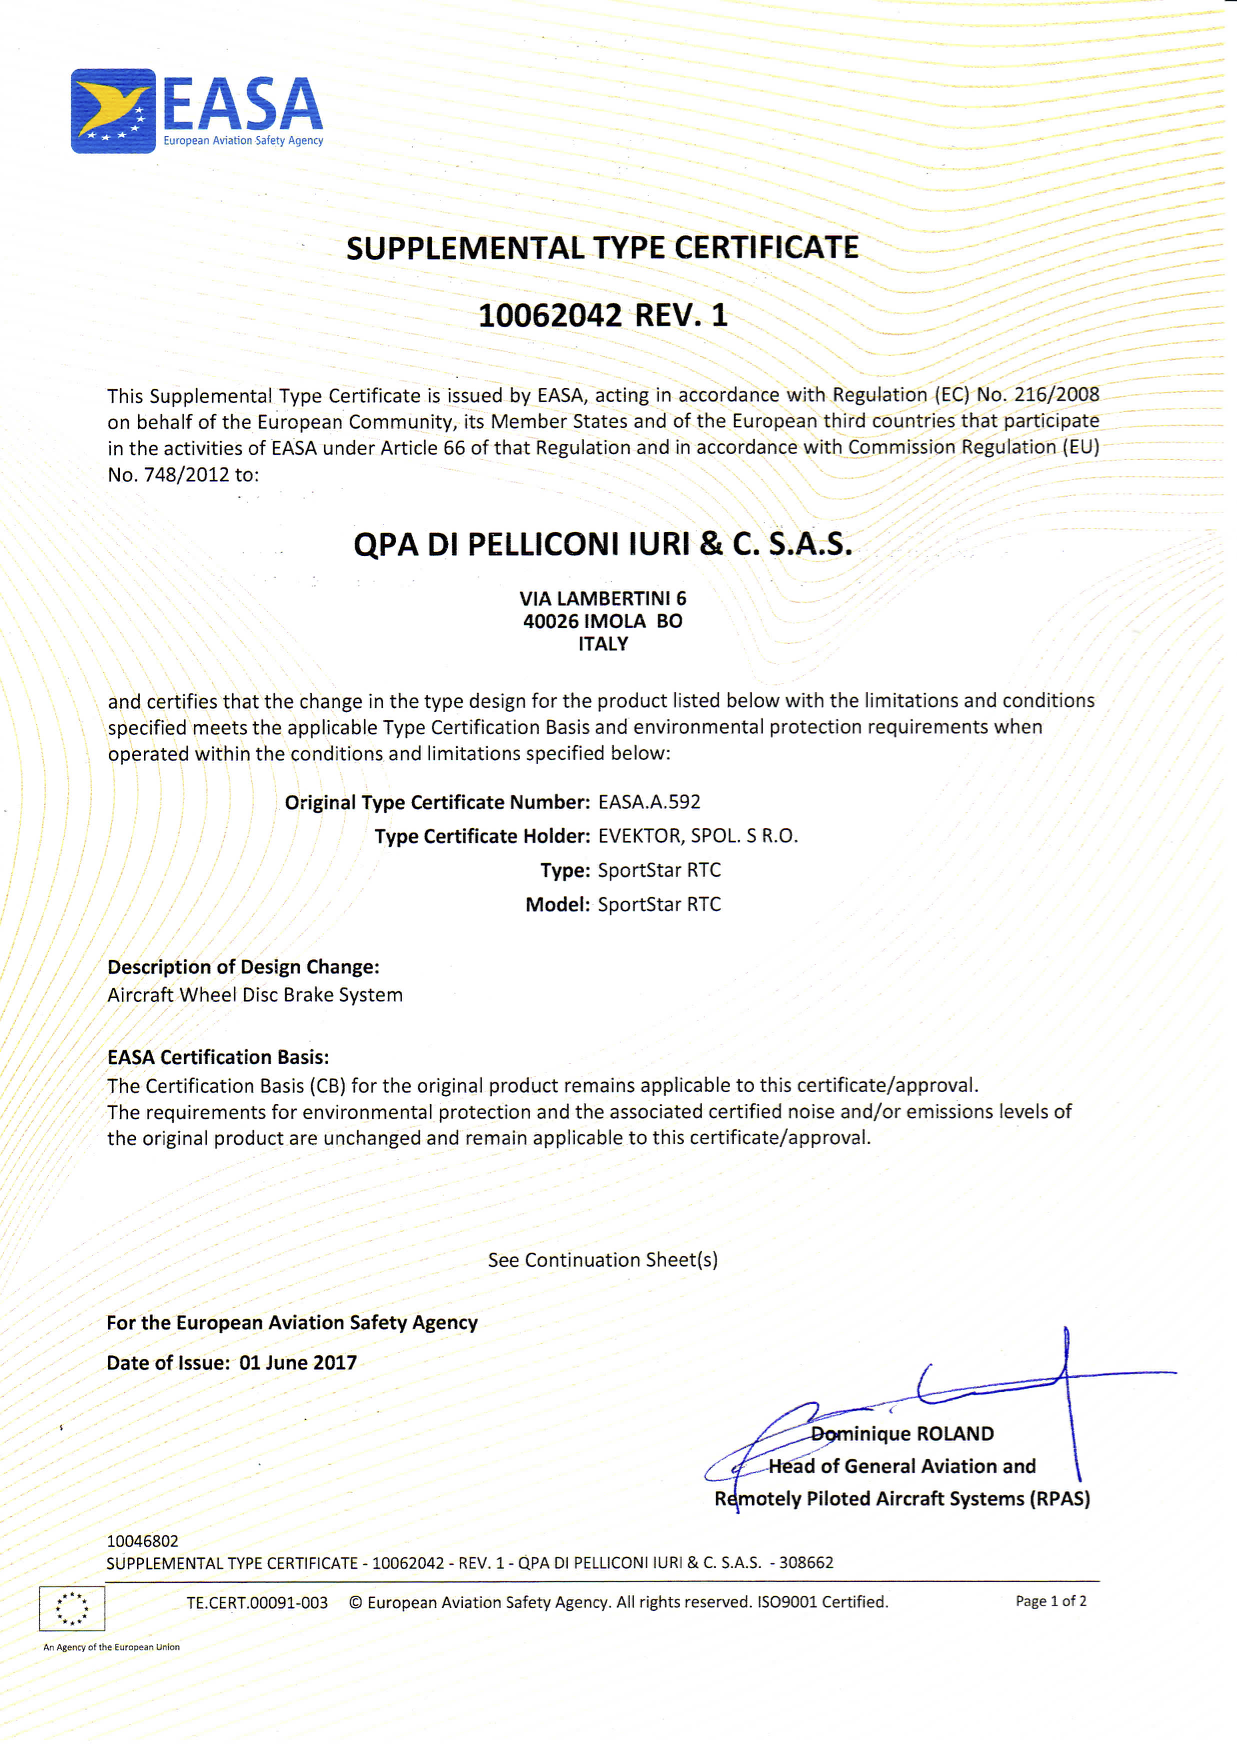 Type certificate. EASA сертификат. Supplemental Type Certificate. EASA Medical Certificate. Types of Certificates.